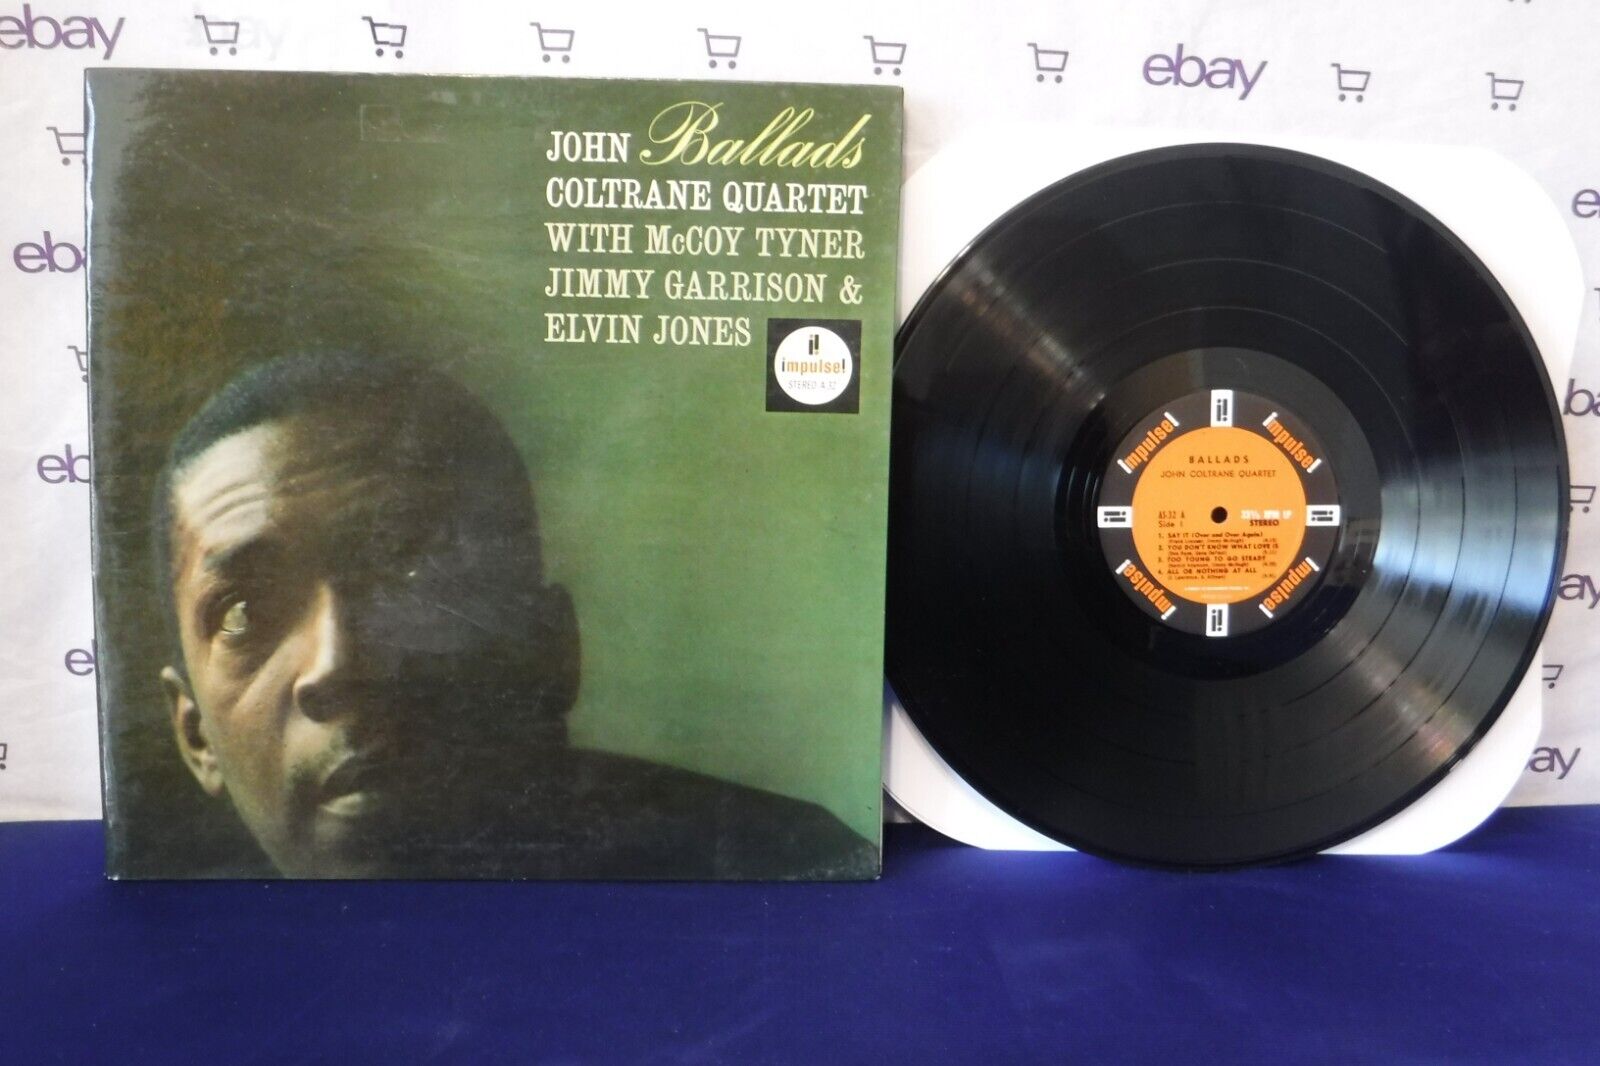 John Coltrane Quartet, Ballads, 1965 Impulse Stereo A-32 RE Gatefold Jazz